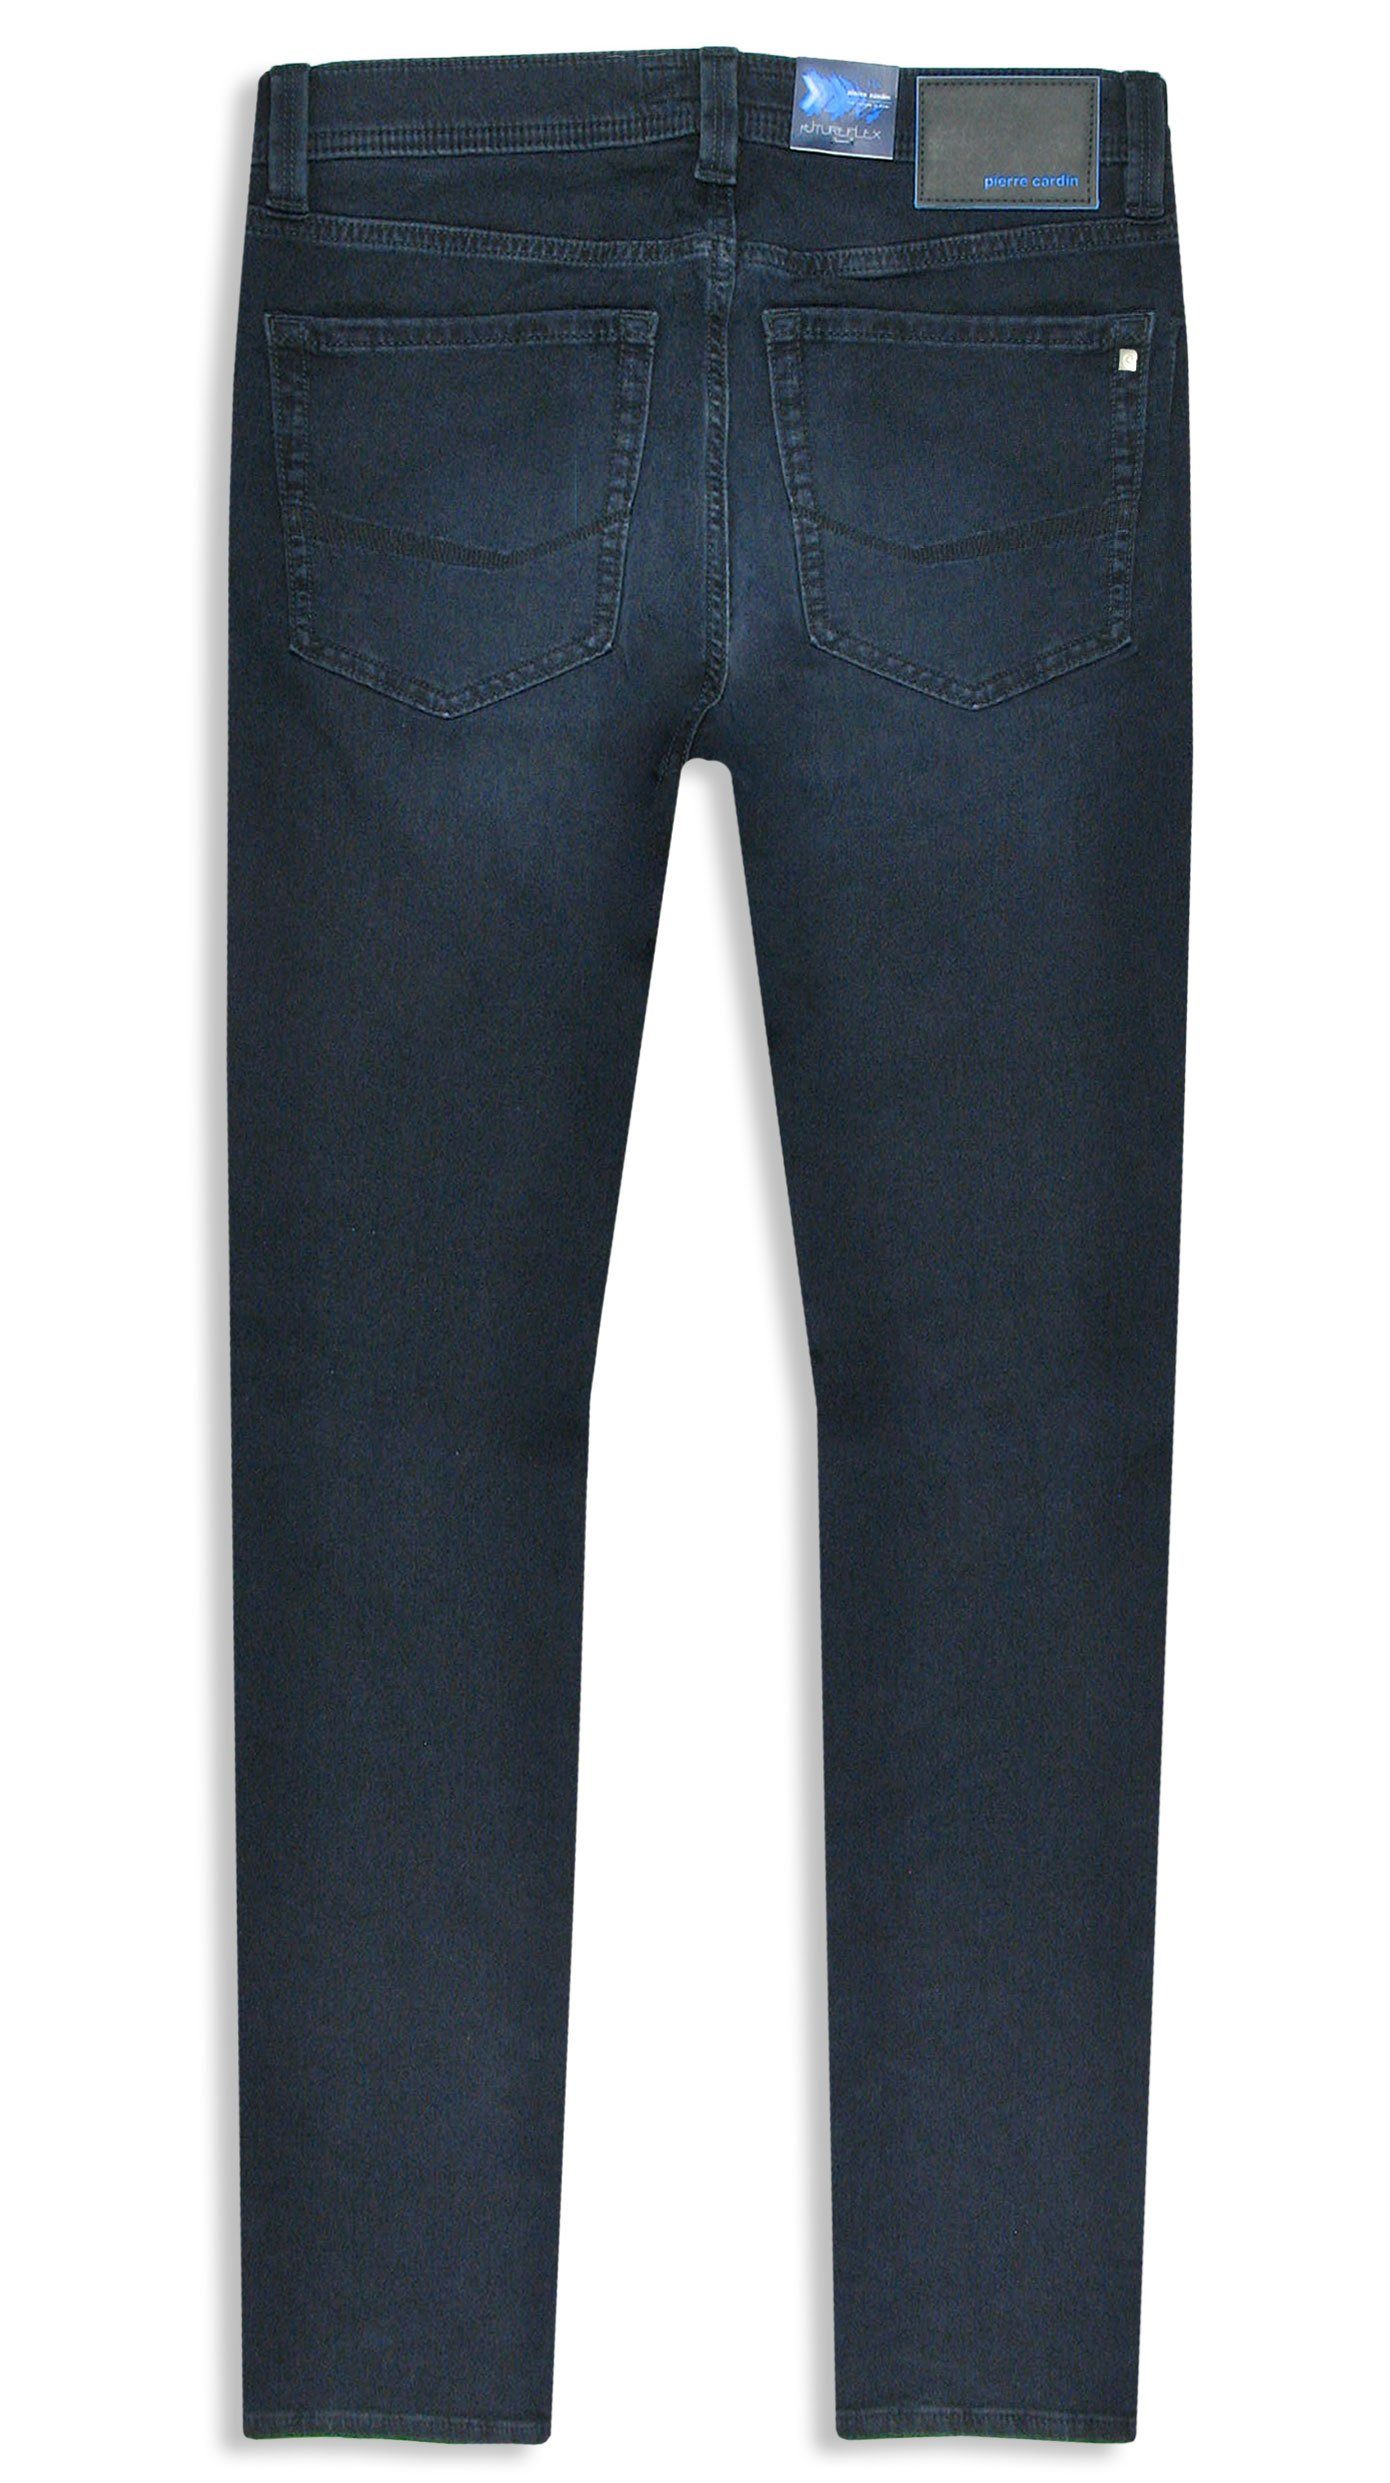 Cardin Buffies Organic 5-Pocket-Jeans Tapered Futureflex Lyon Pierre Cotton Fit Deep Blue Jeans